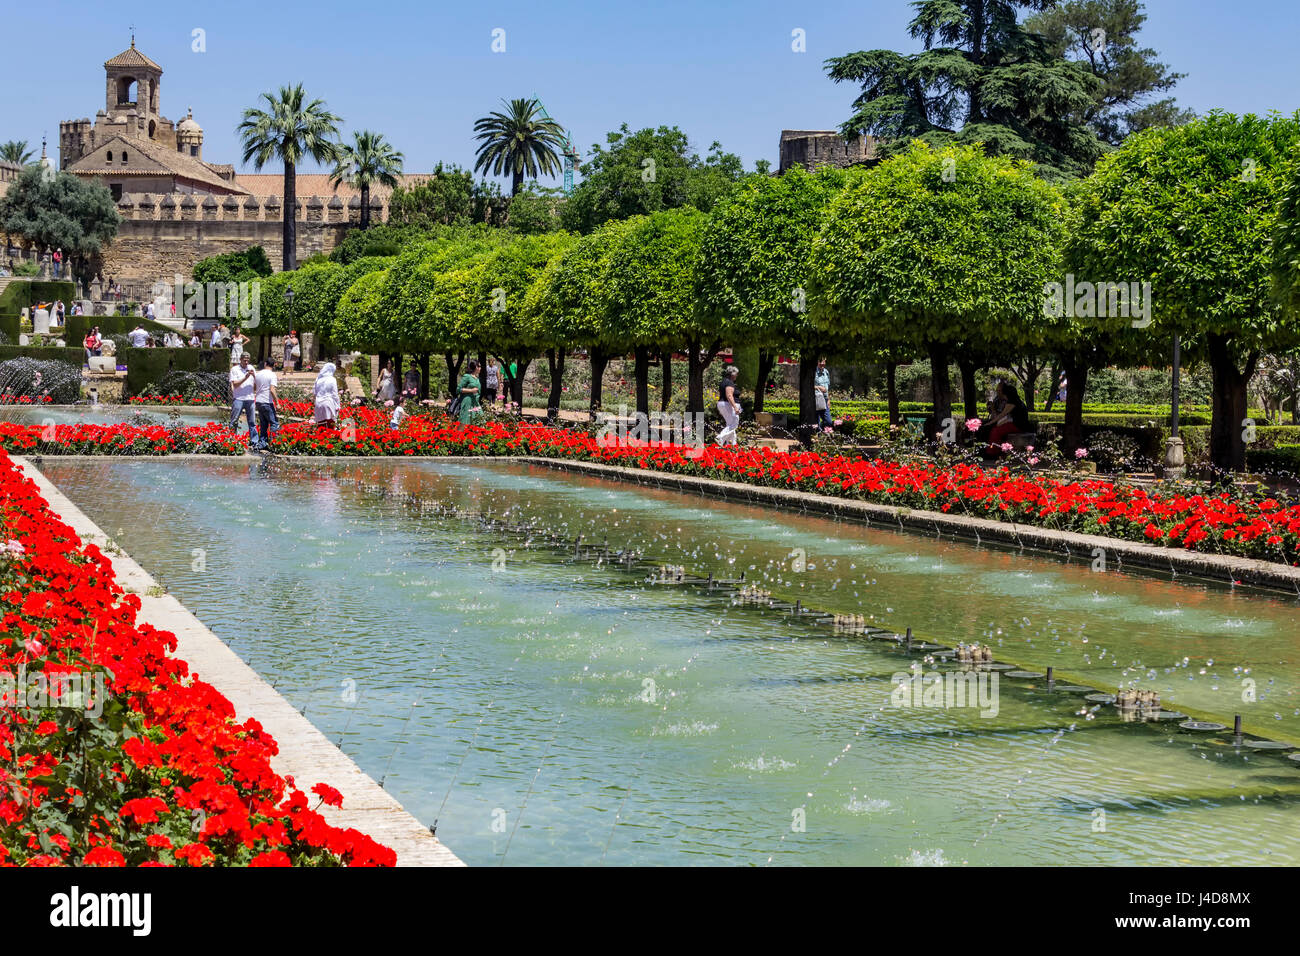 Fountains and gardens, Alcazar de los Reyes Cristianos (Palace of the Christian Monarchs), Cordoba, Spain Stock Photo